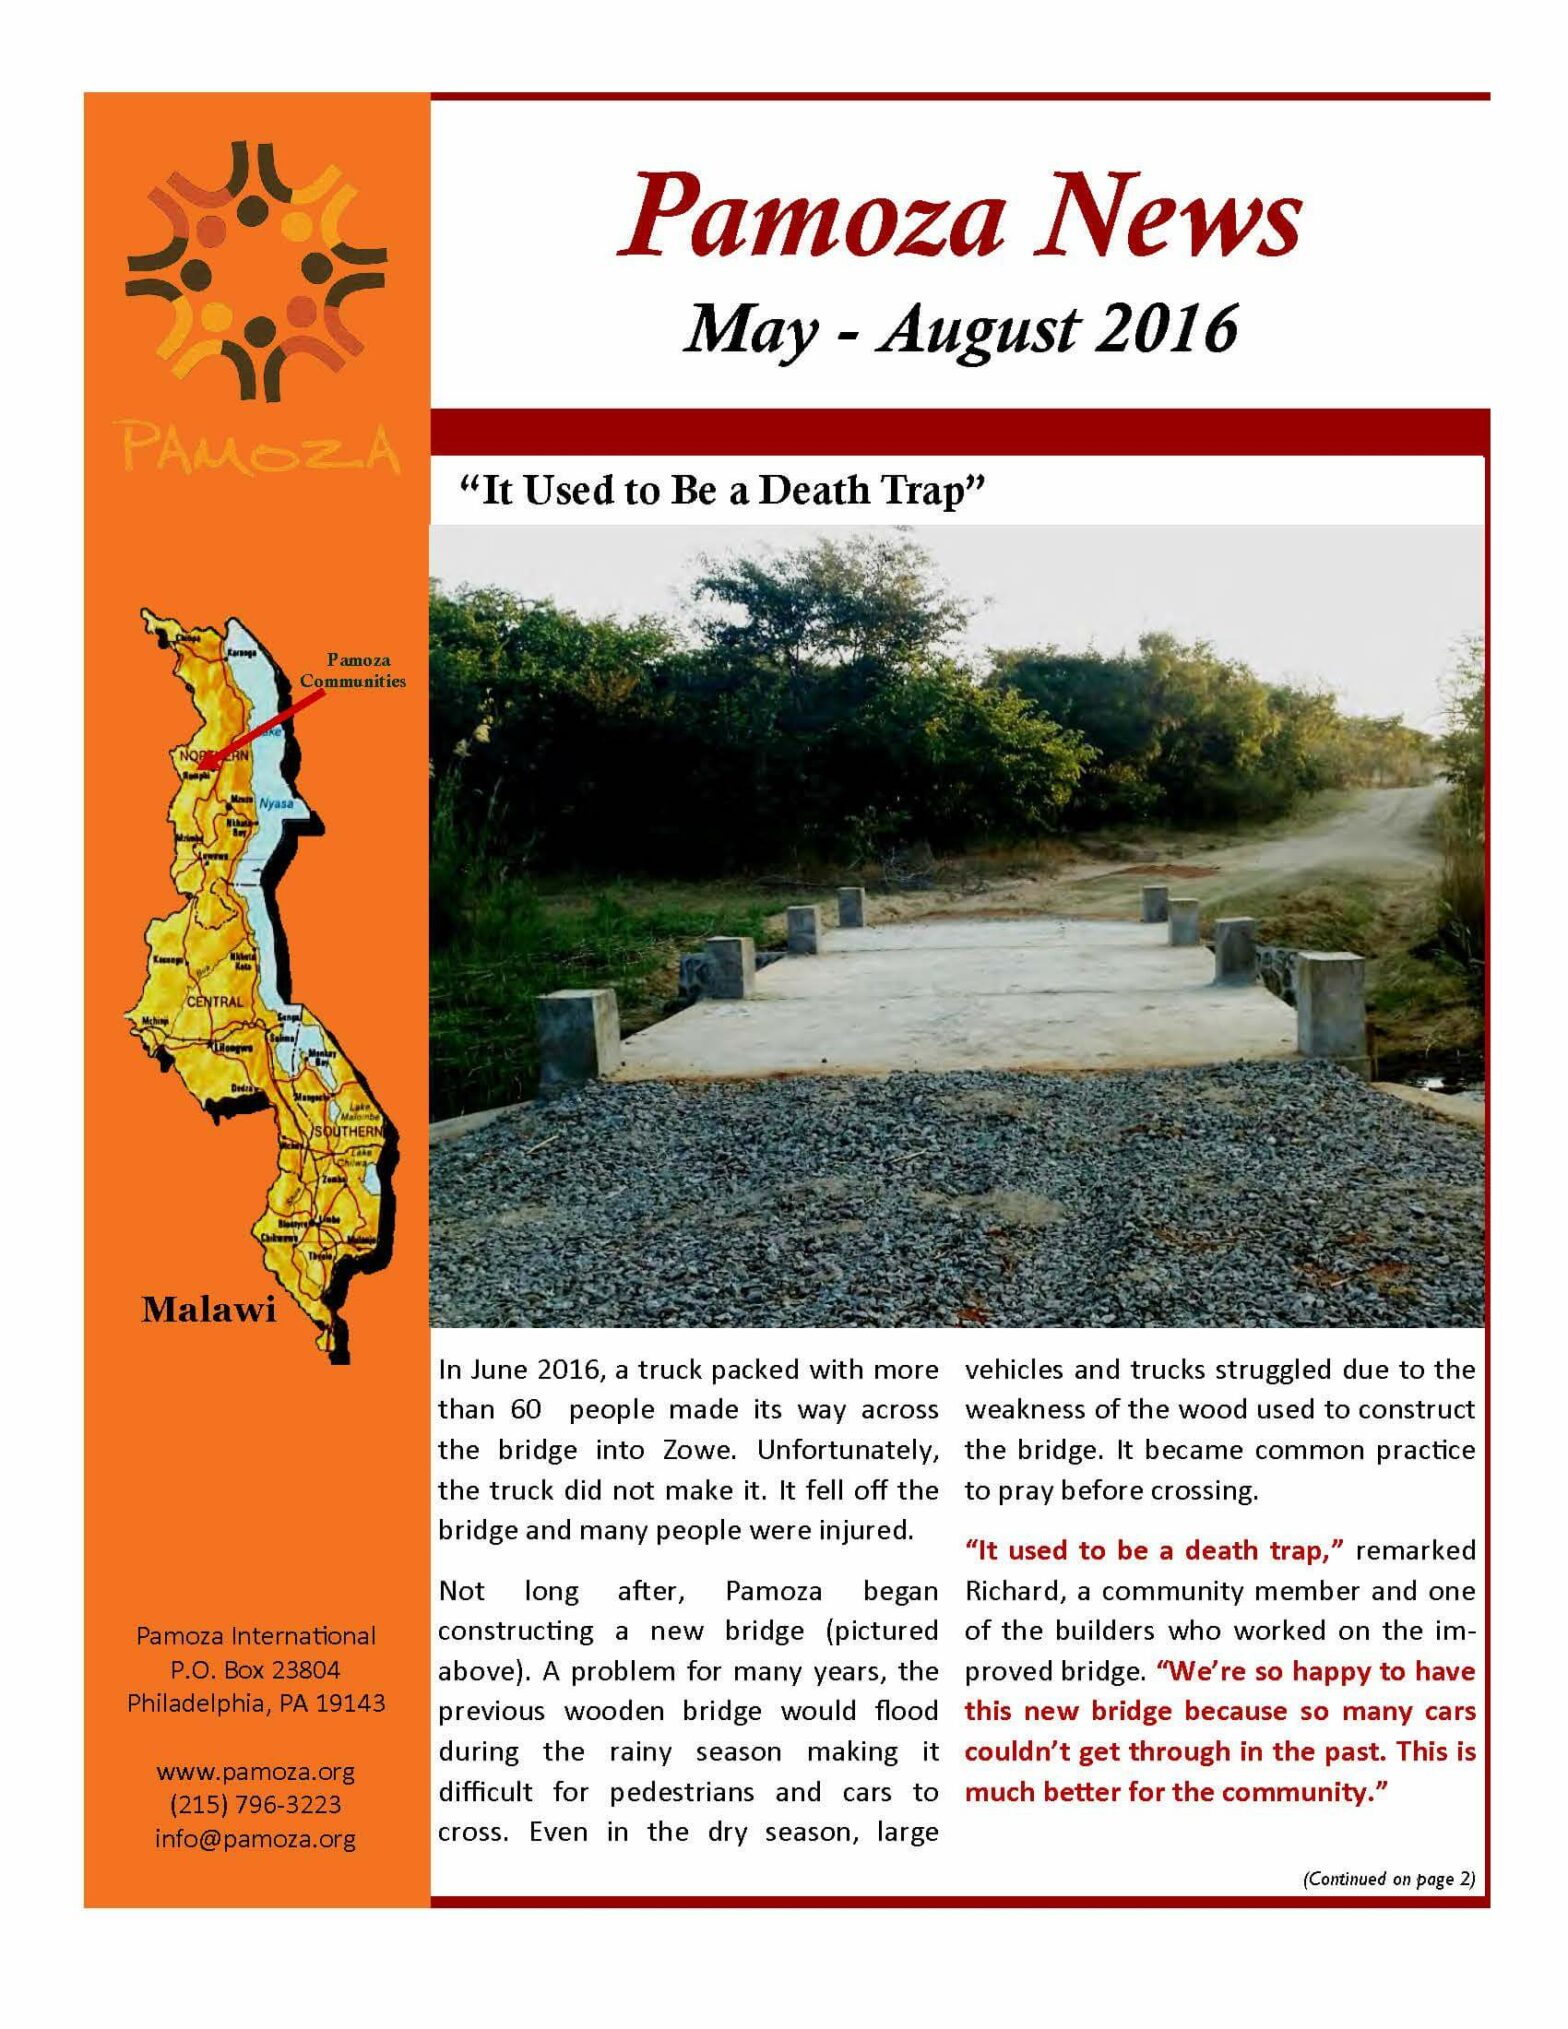 Pamoza News - May through August 2016